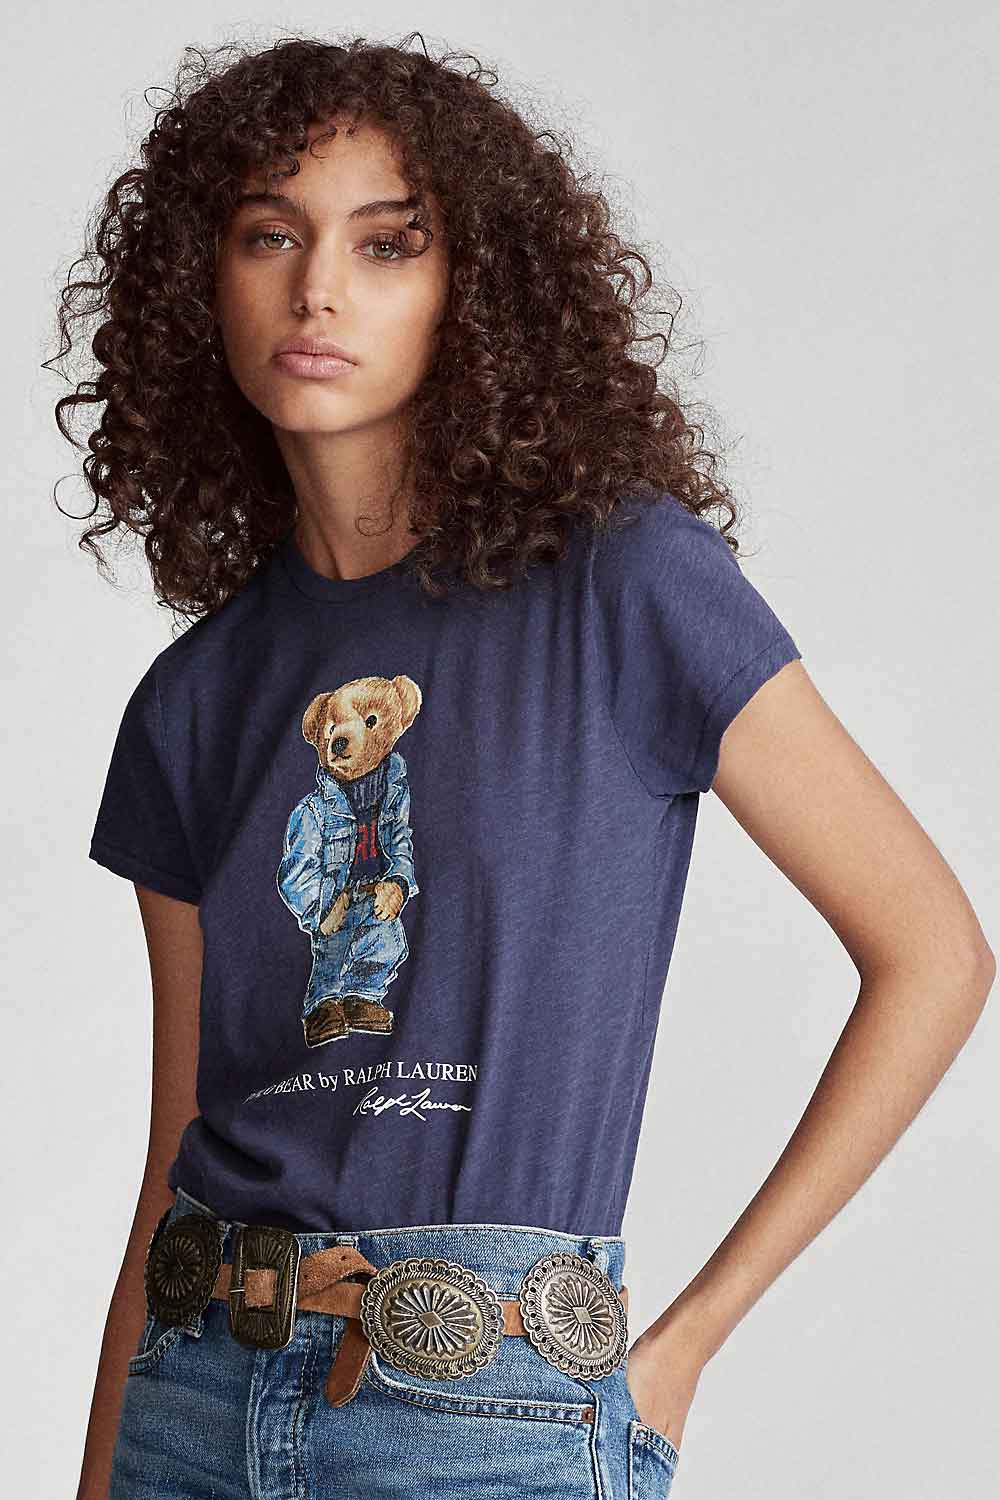 Tshirt Polo Bear - POLO RALPH LAUREN T-shirt POLO RALPH LAUREN   